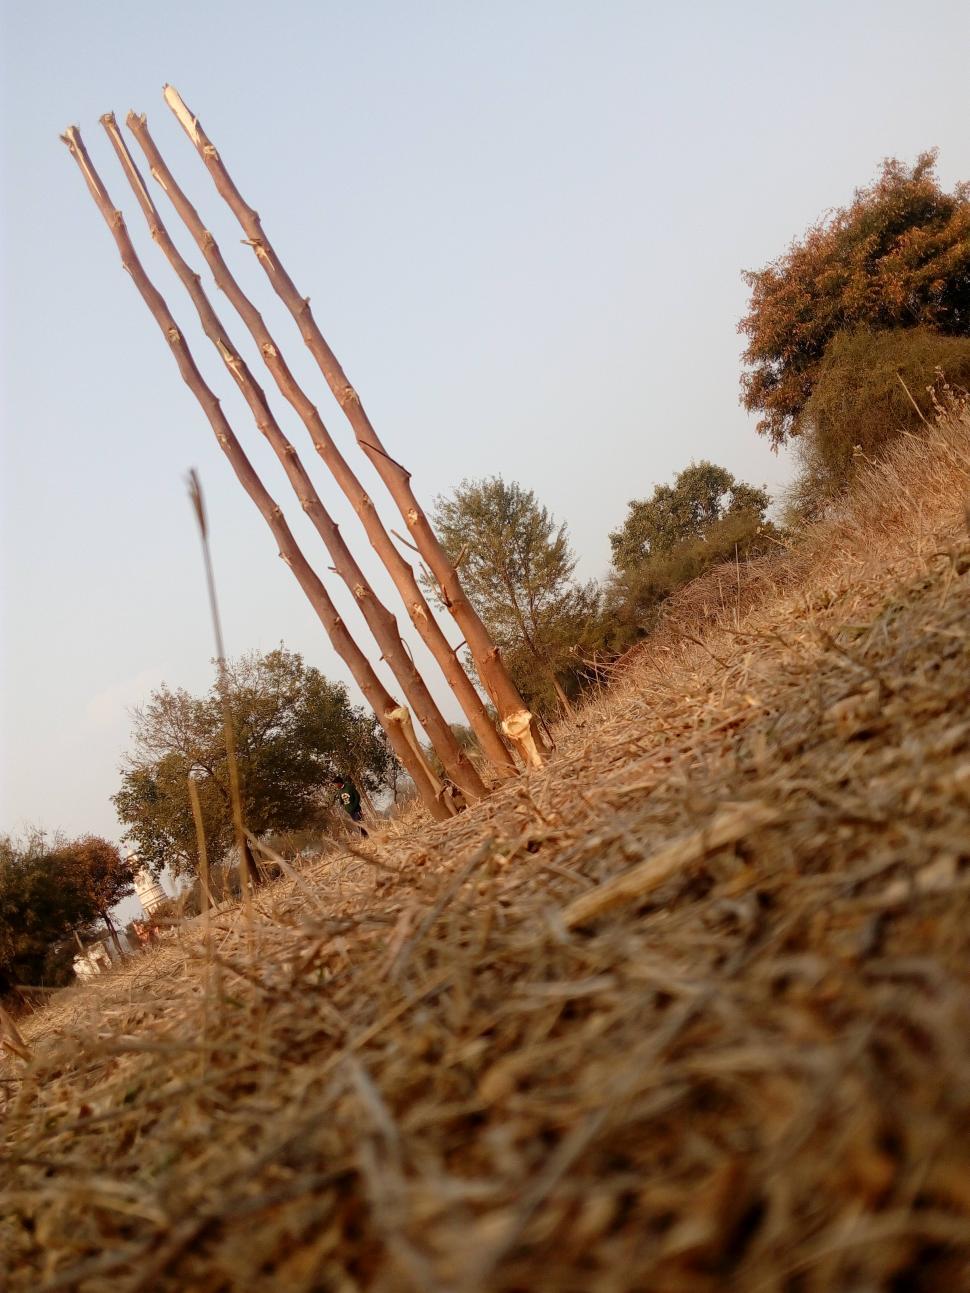 Free Image of Village cricket stumps  